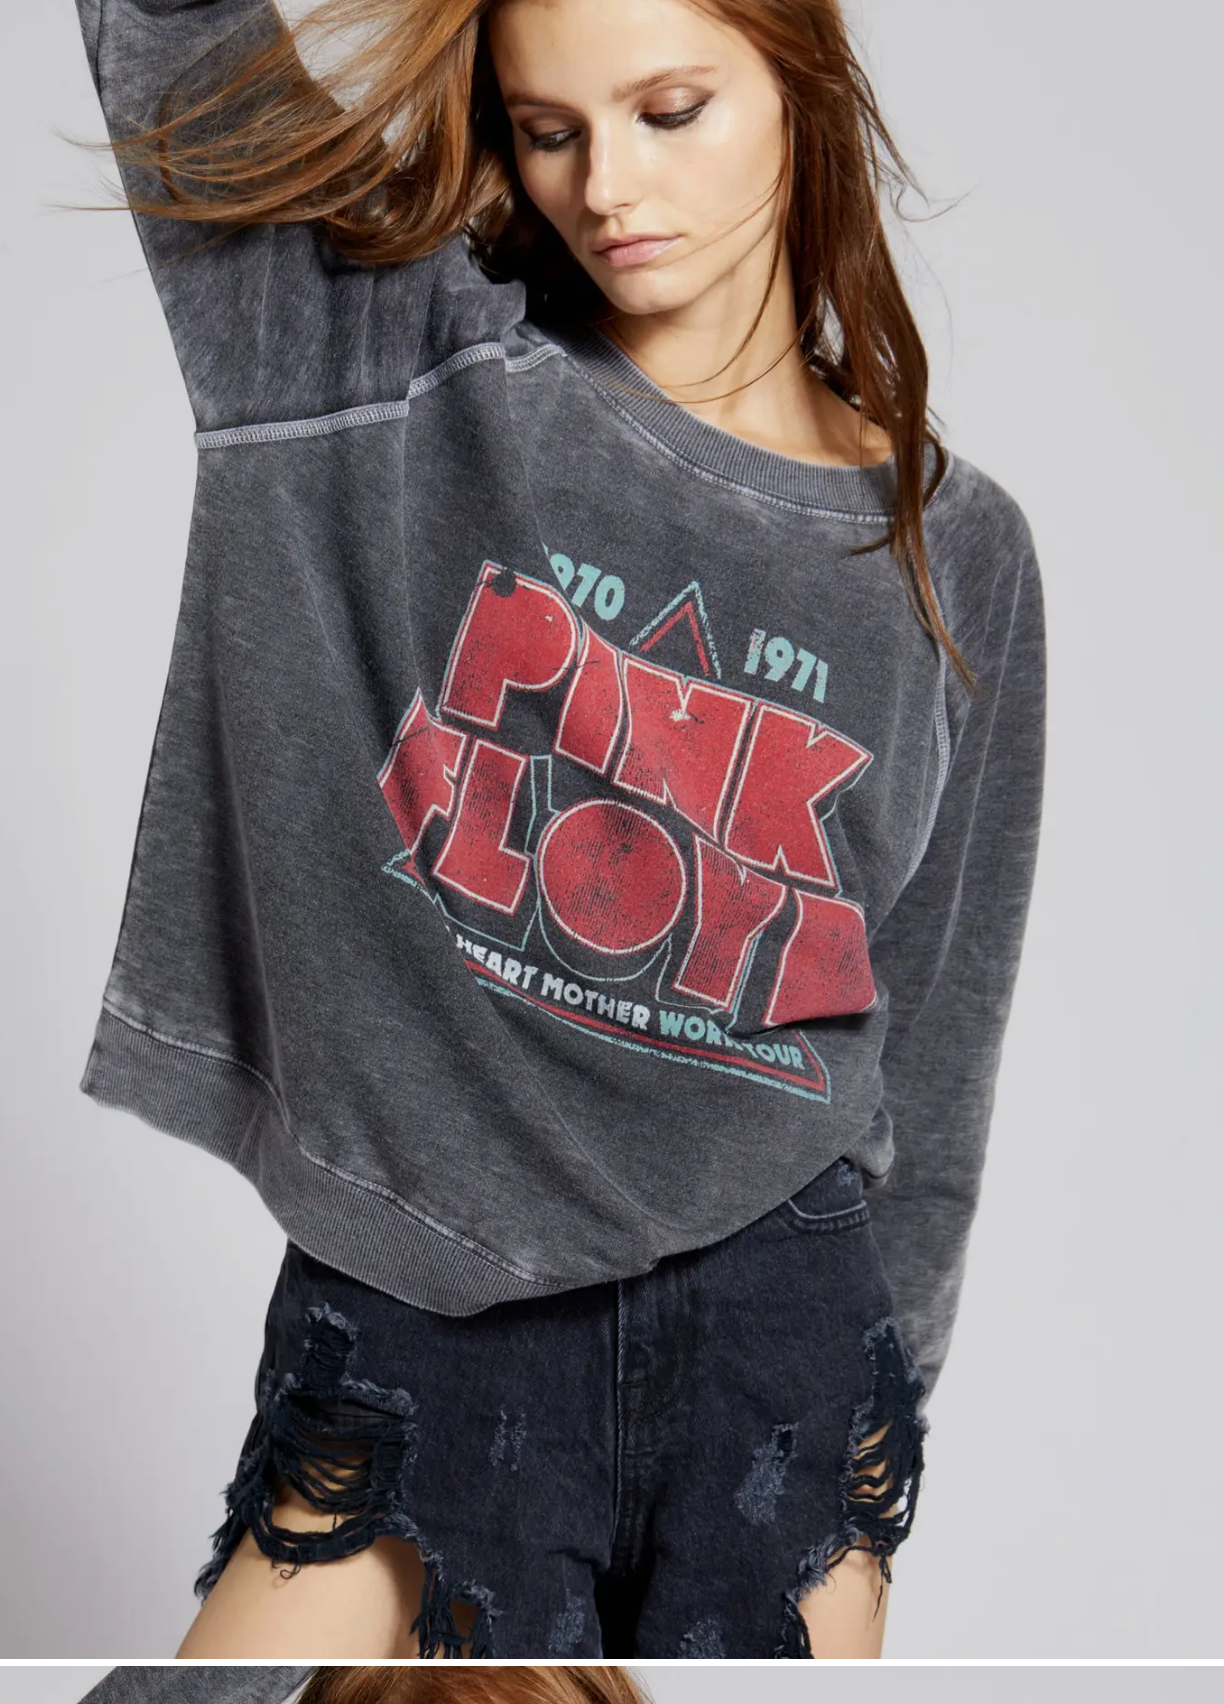 PINK FLOYD Heart Mother World Tour Burnout Sweatshirt Dec 15